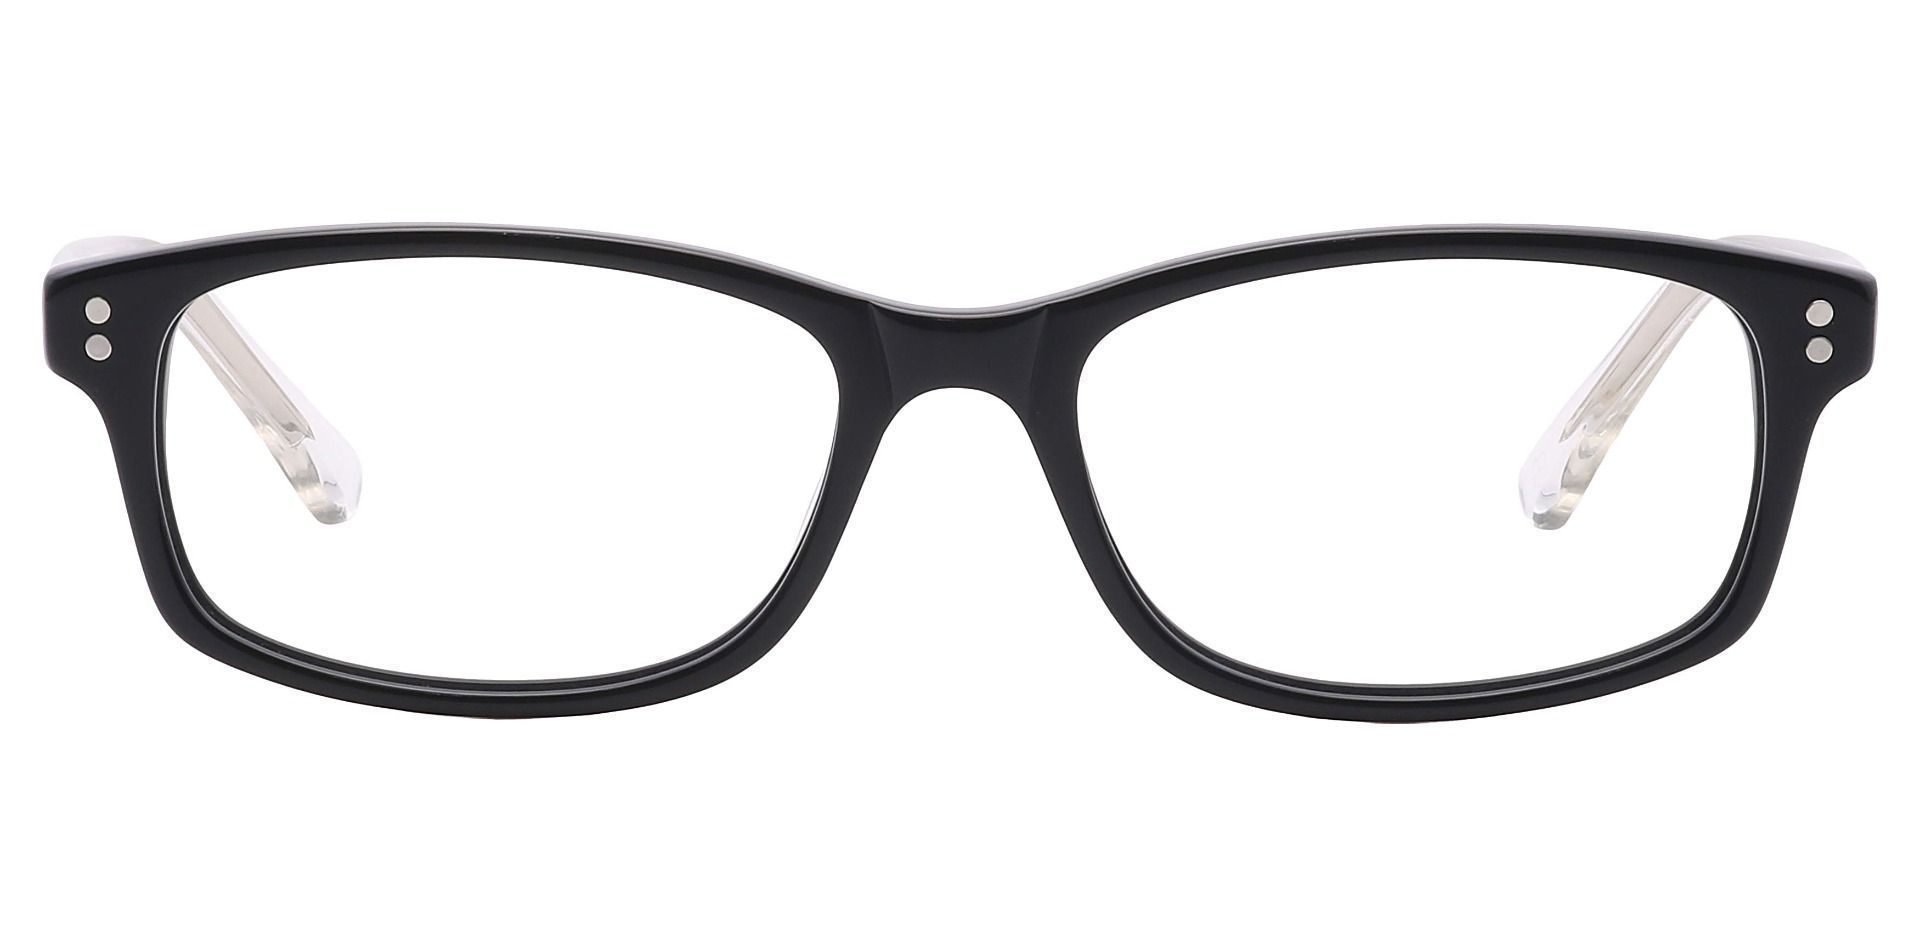 Olmstead Rectangle Lined Bifocal Glasses - Black